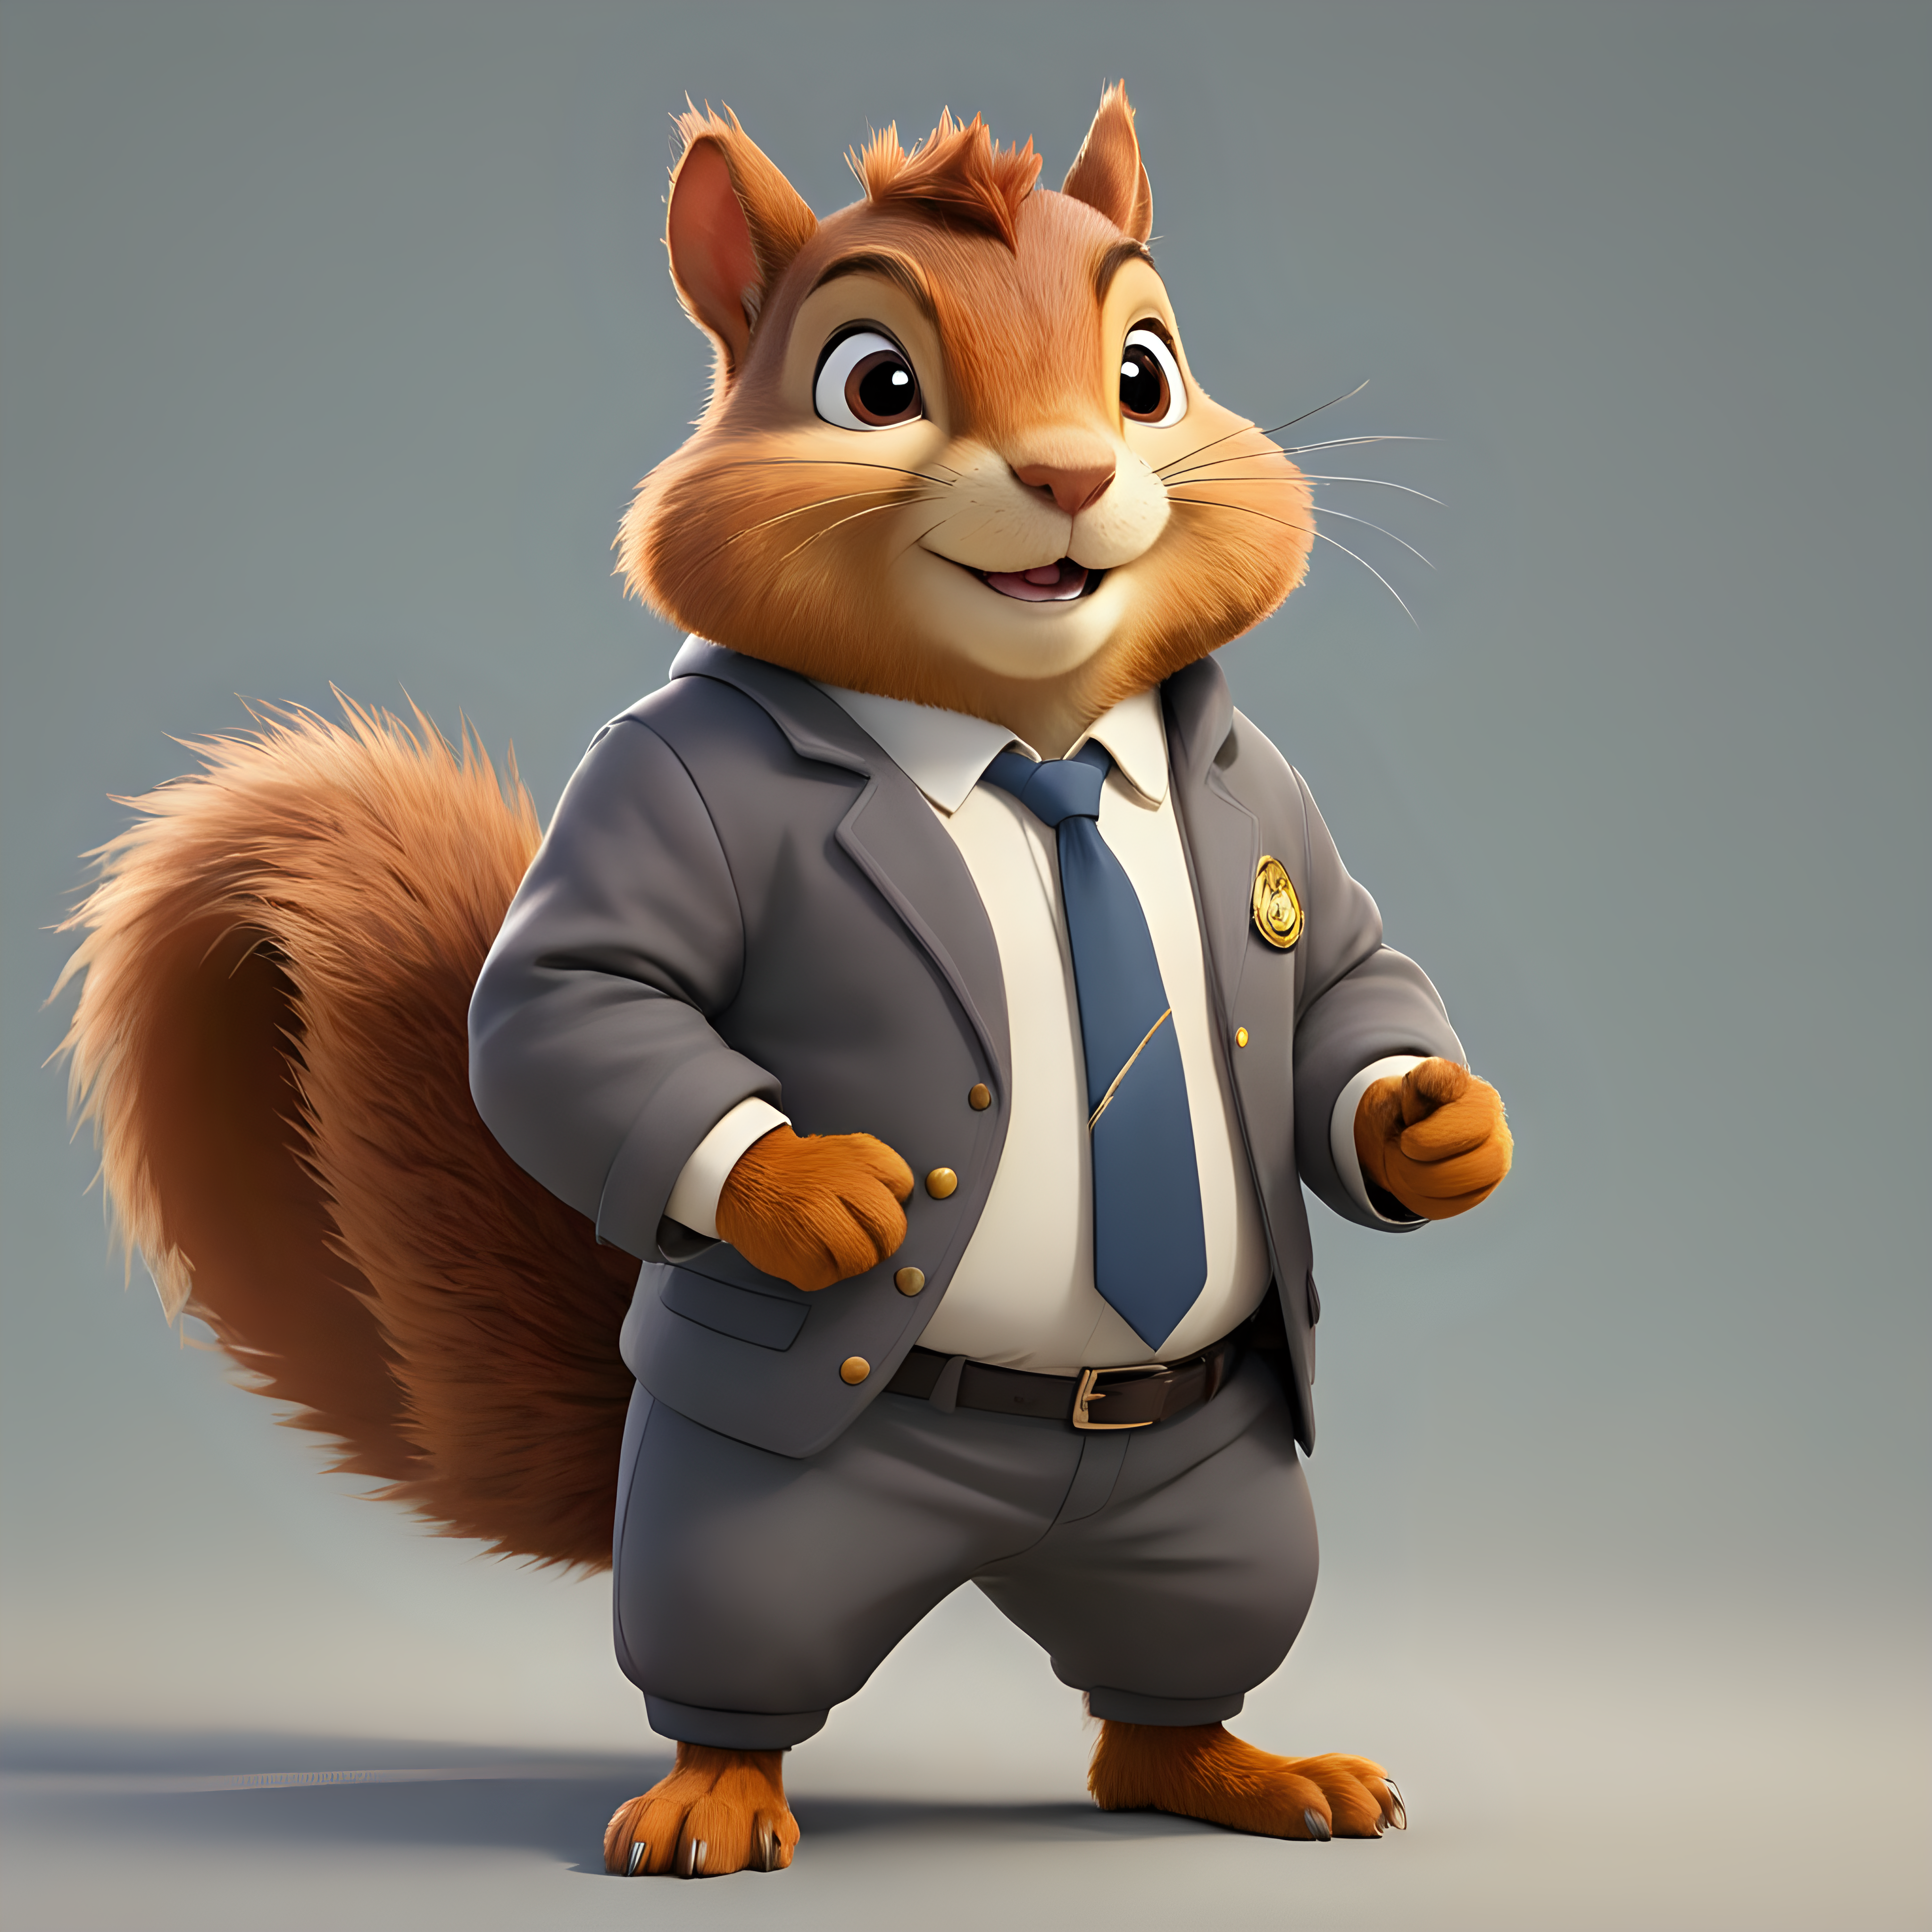 Cartoon Mayor Squirrel in Full Body Costume